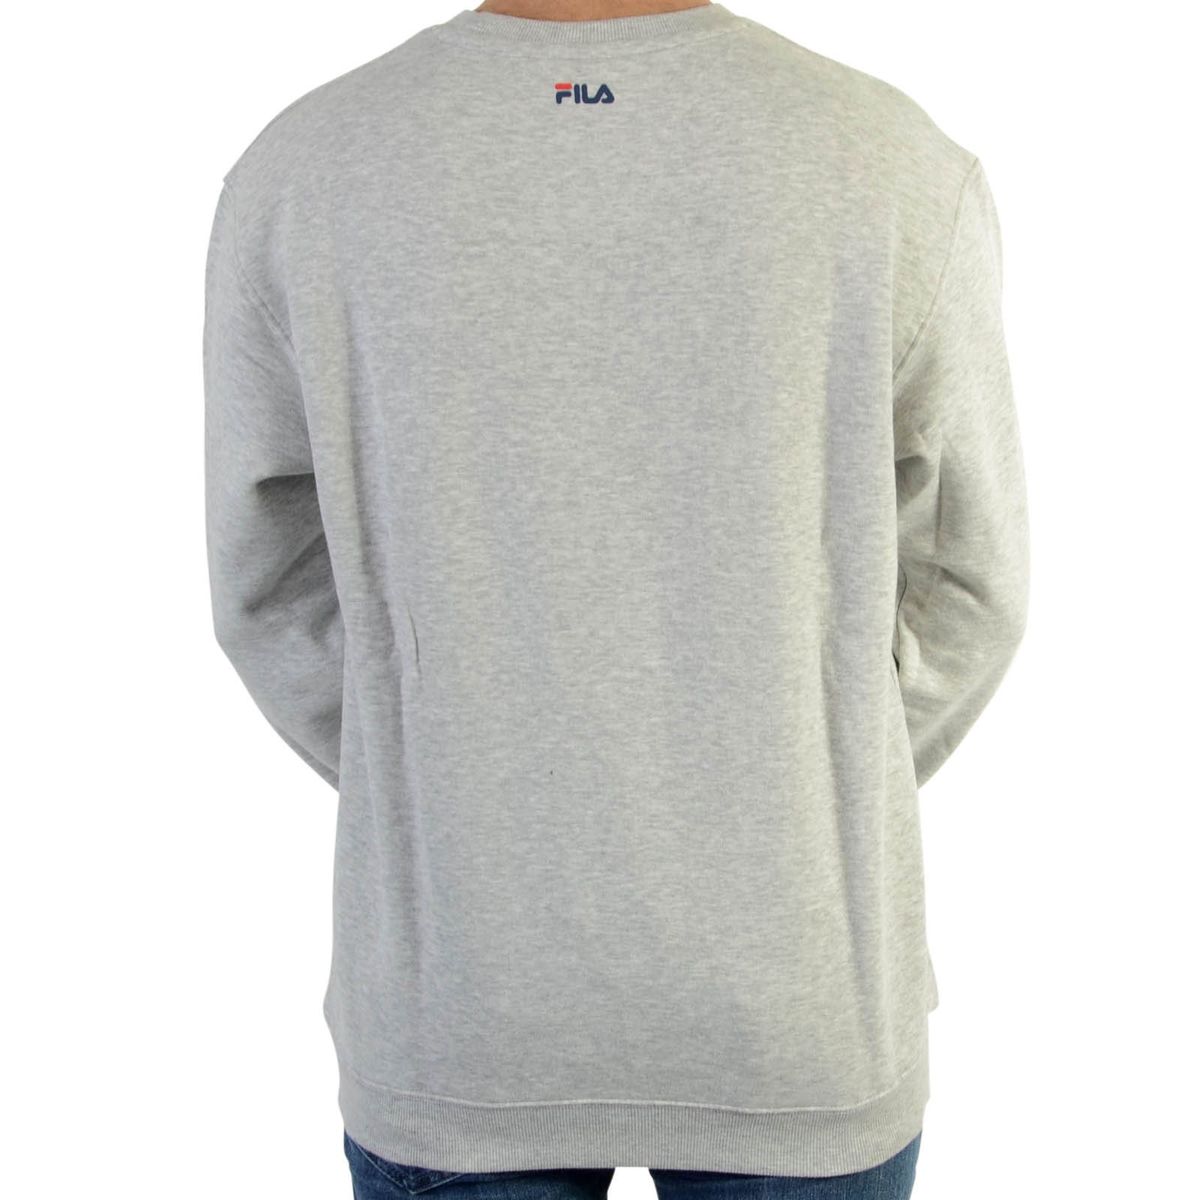 Fila Basic Sweater Light Grey Taille Xs